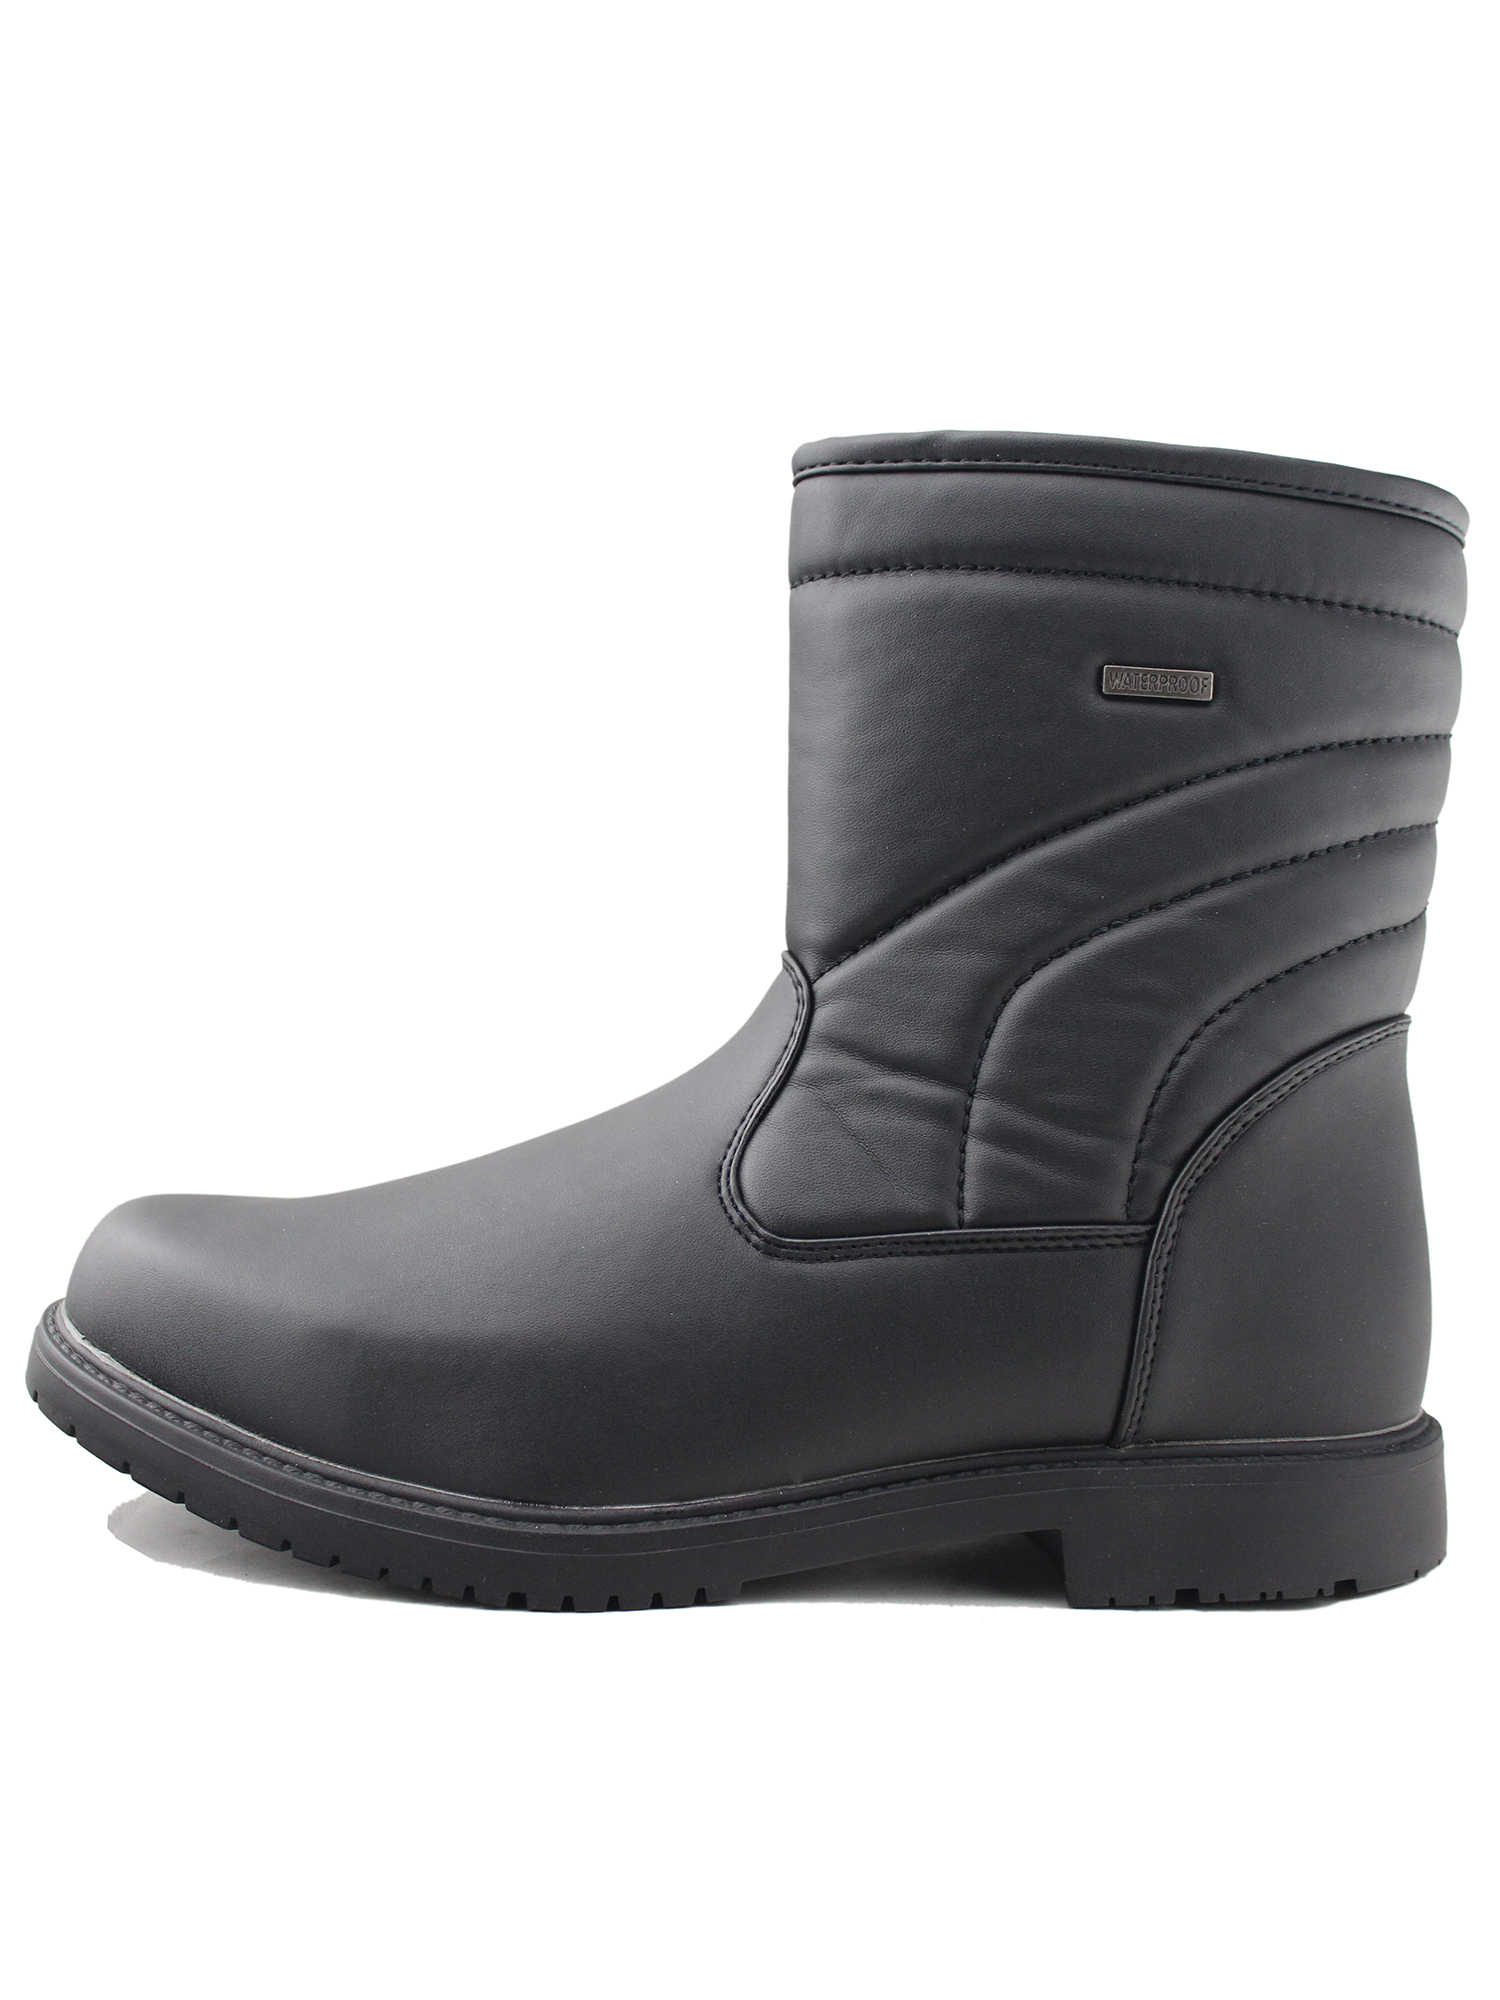 Tanleewa Men's Winter Boots Fur Lining Waterproof Non Slip Snow Boots Side Zipper Shoe Size 8 - image 3 of 6